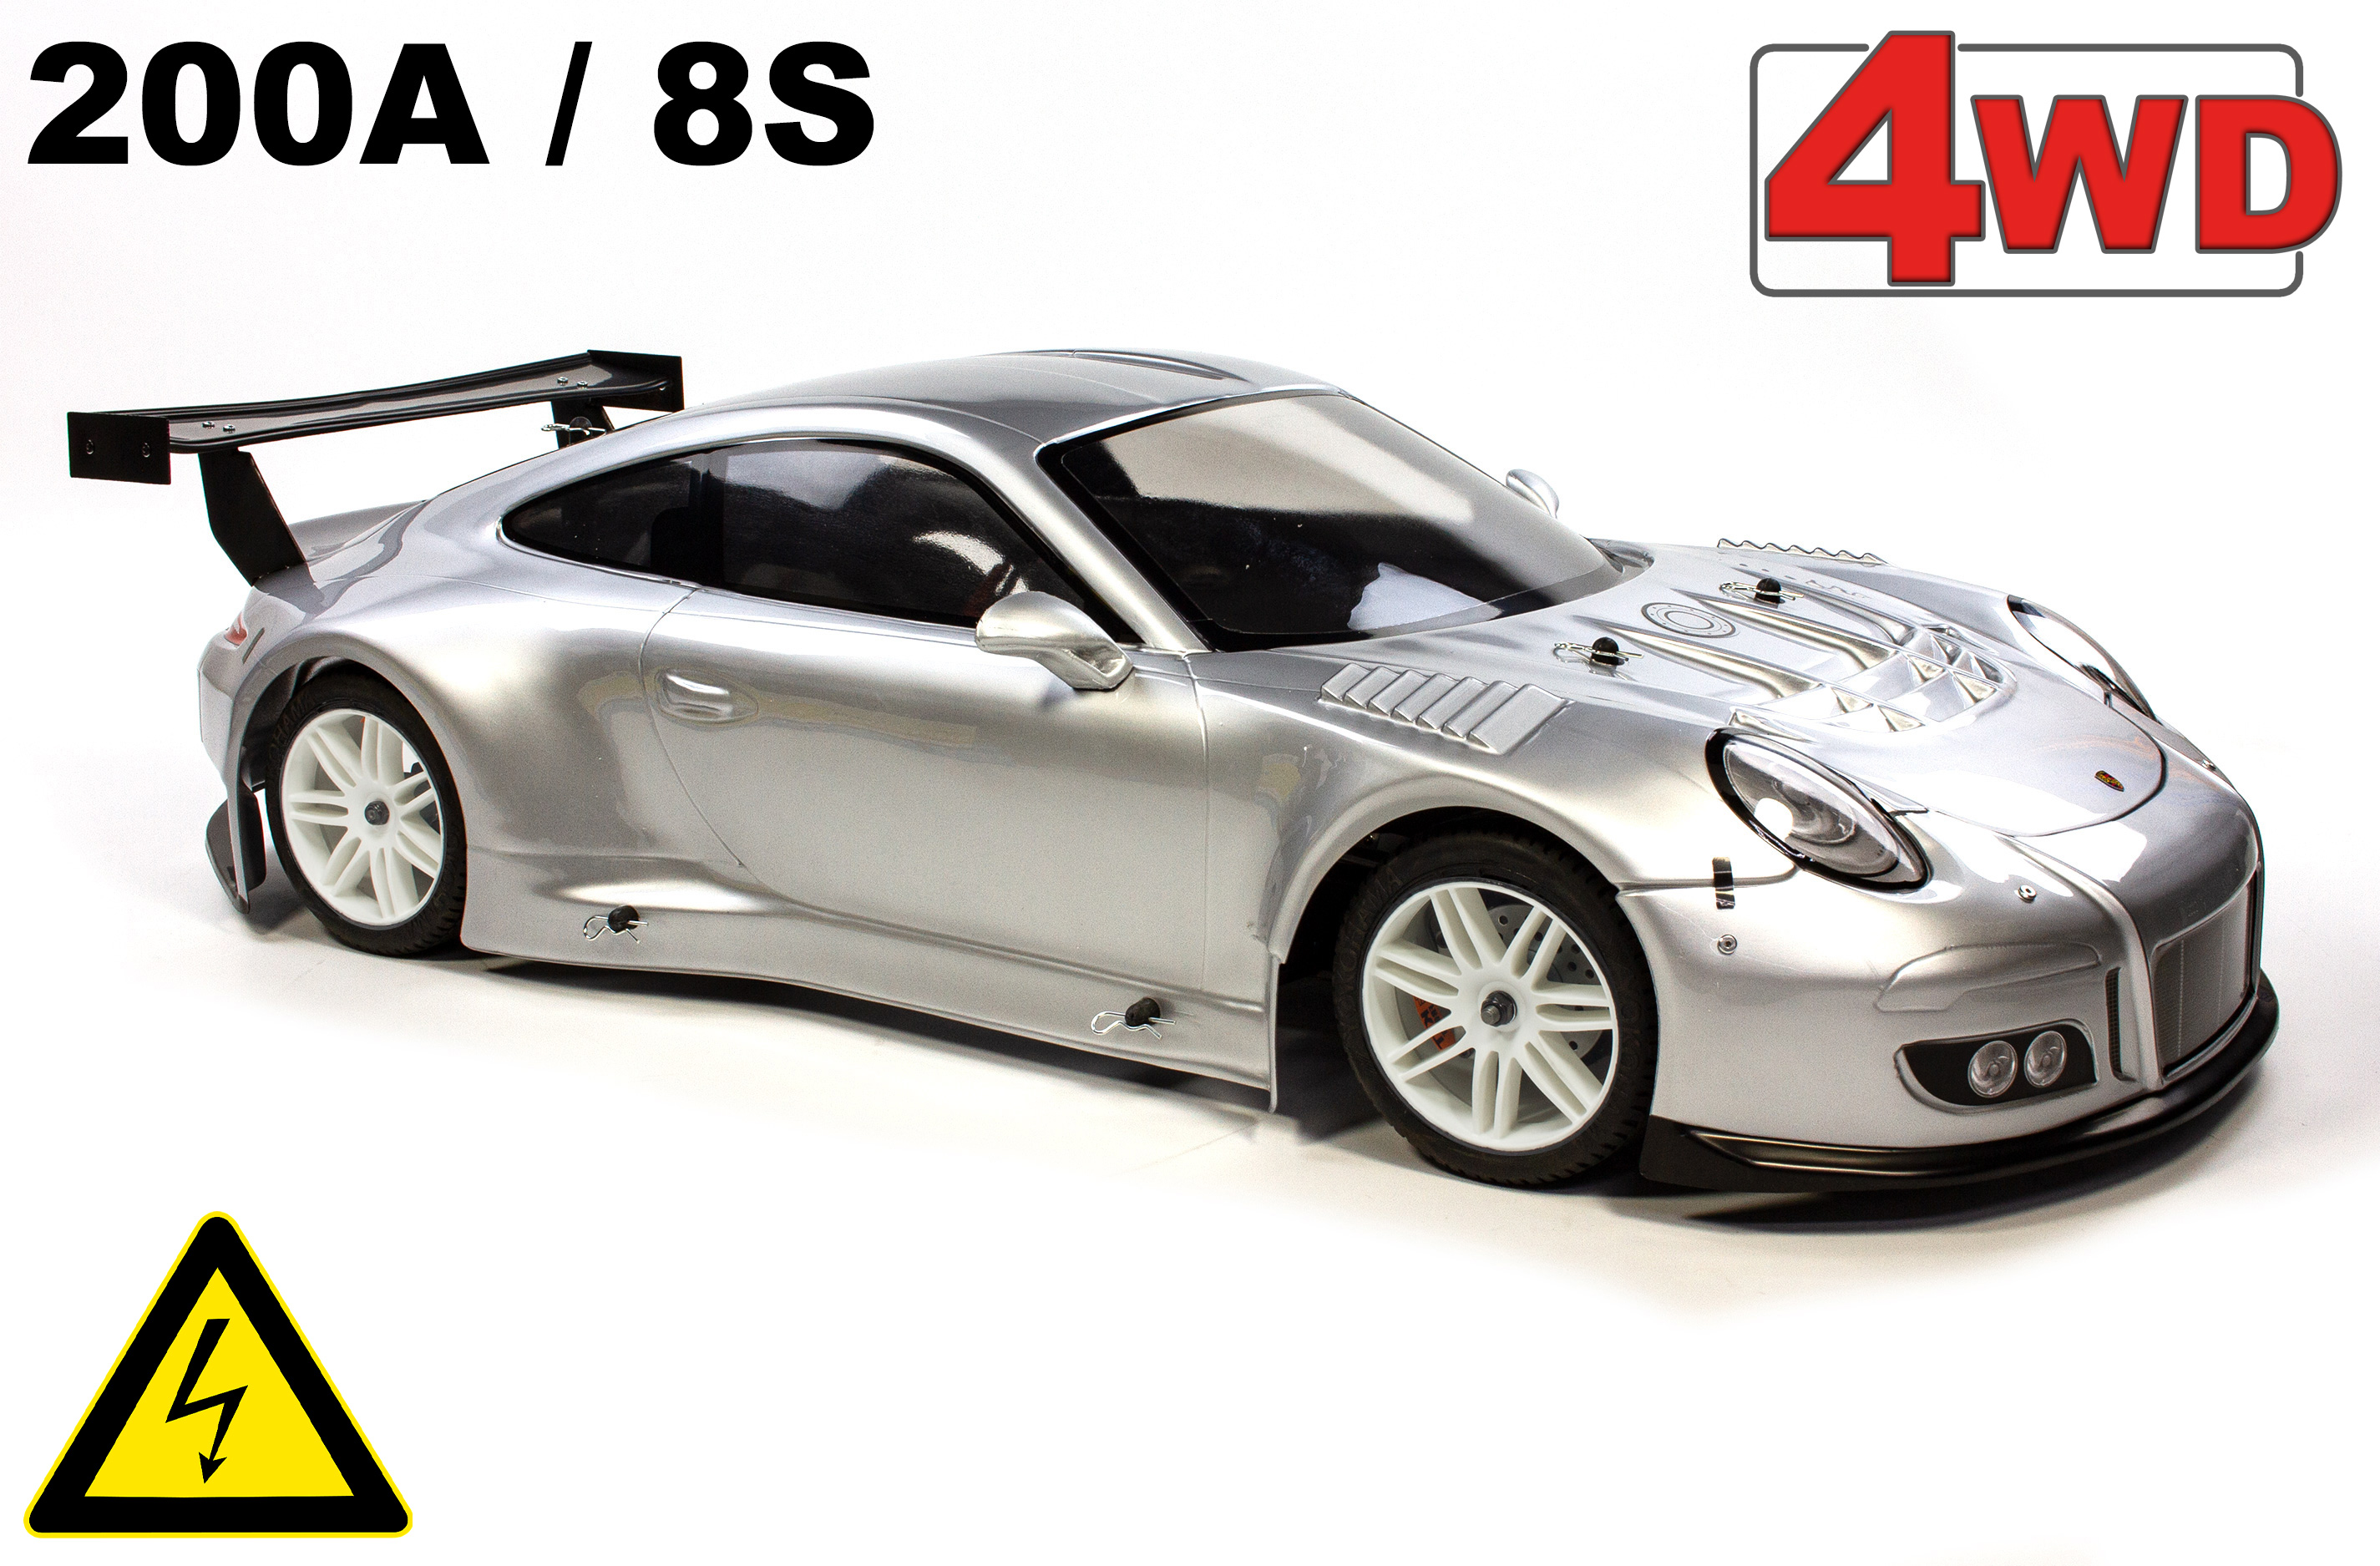 FG Sportsline 4WD-530 Electric Porsche 911, 530 wheelbase